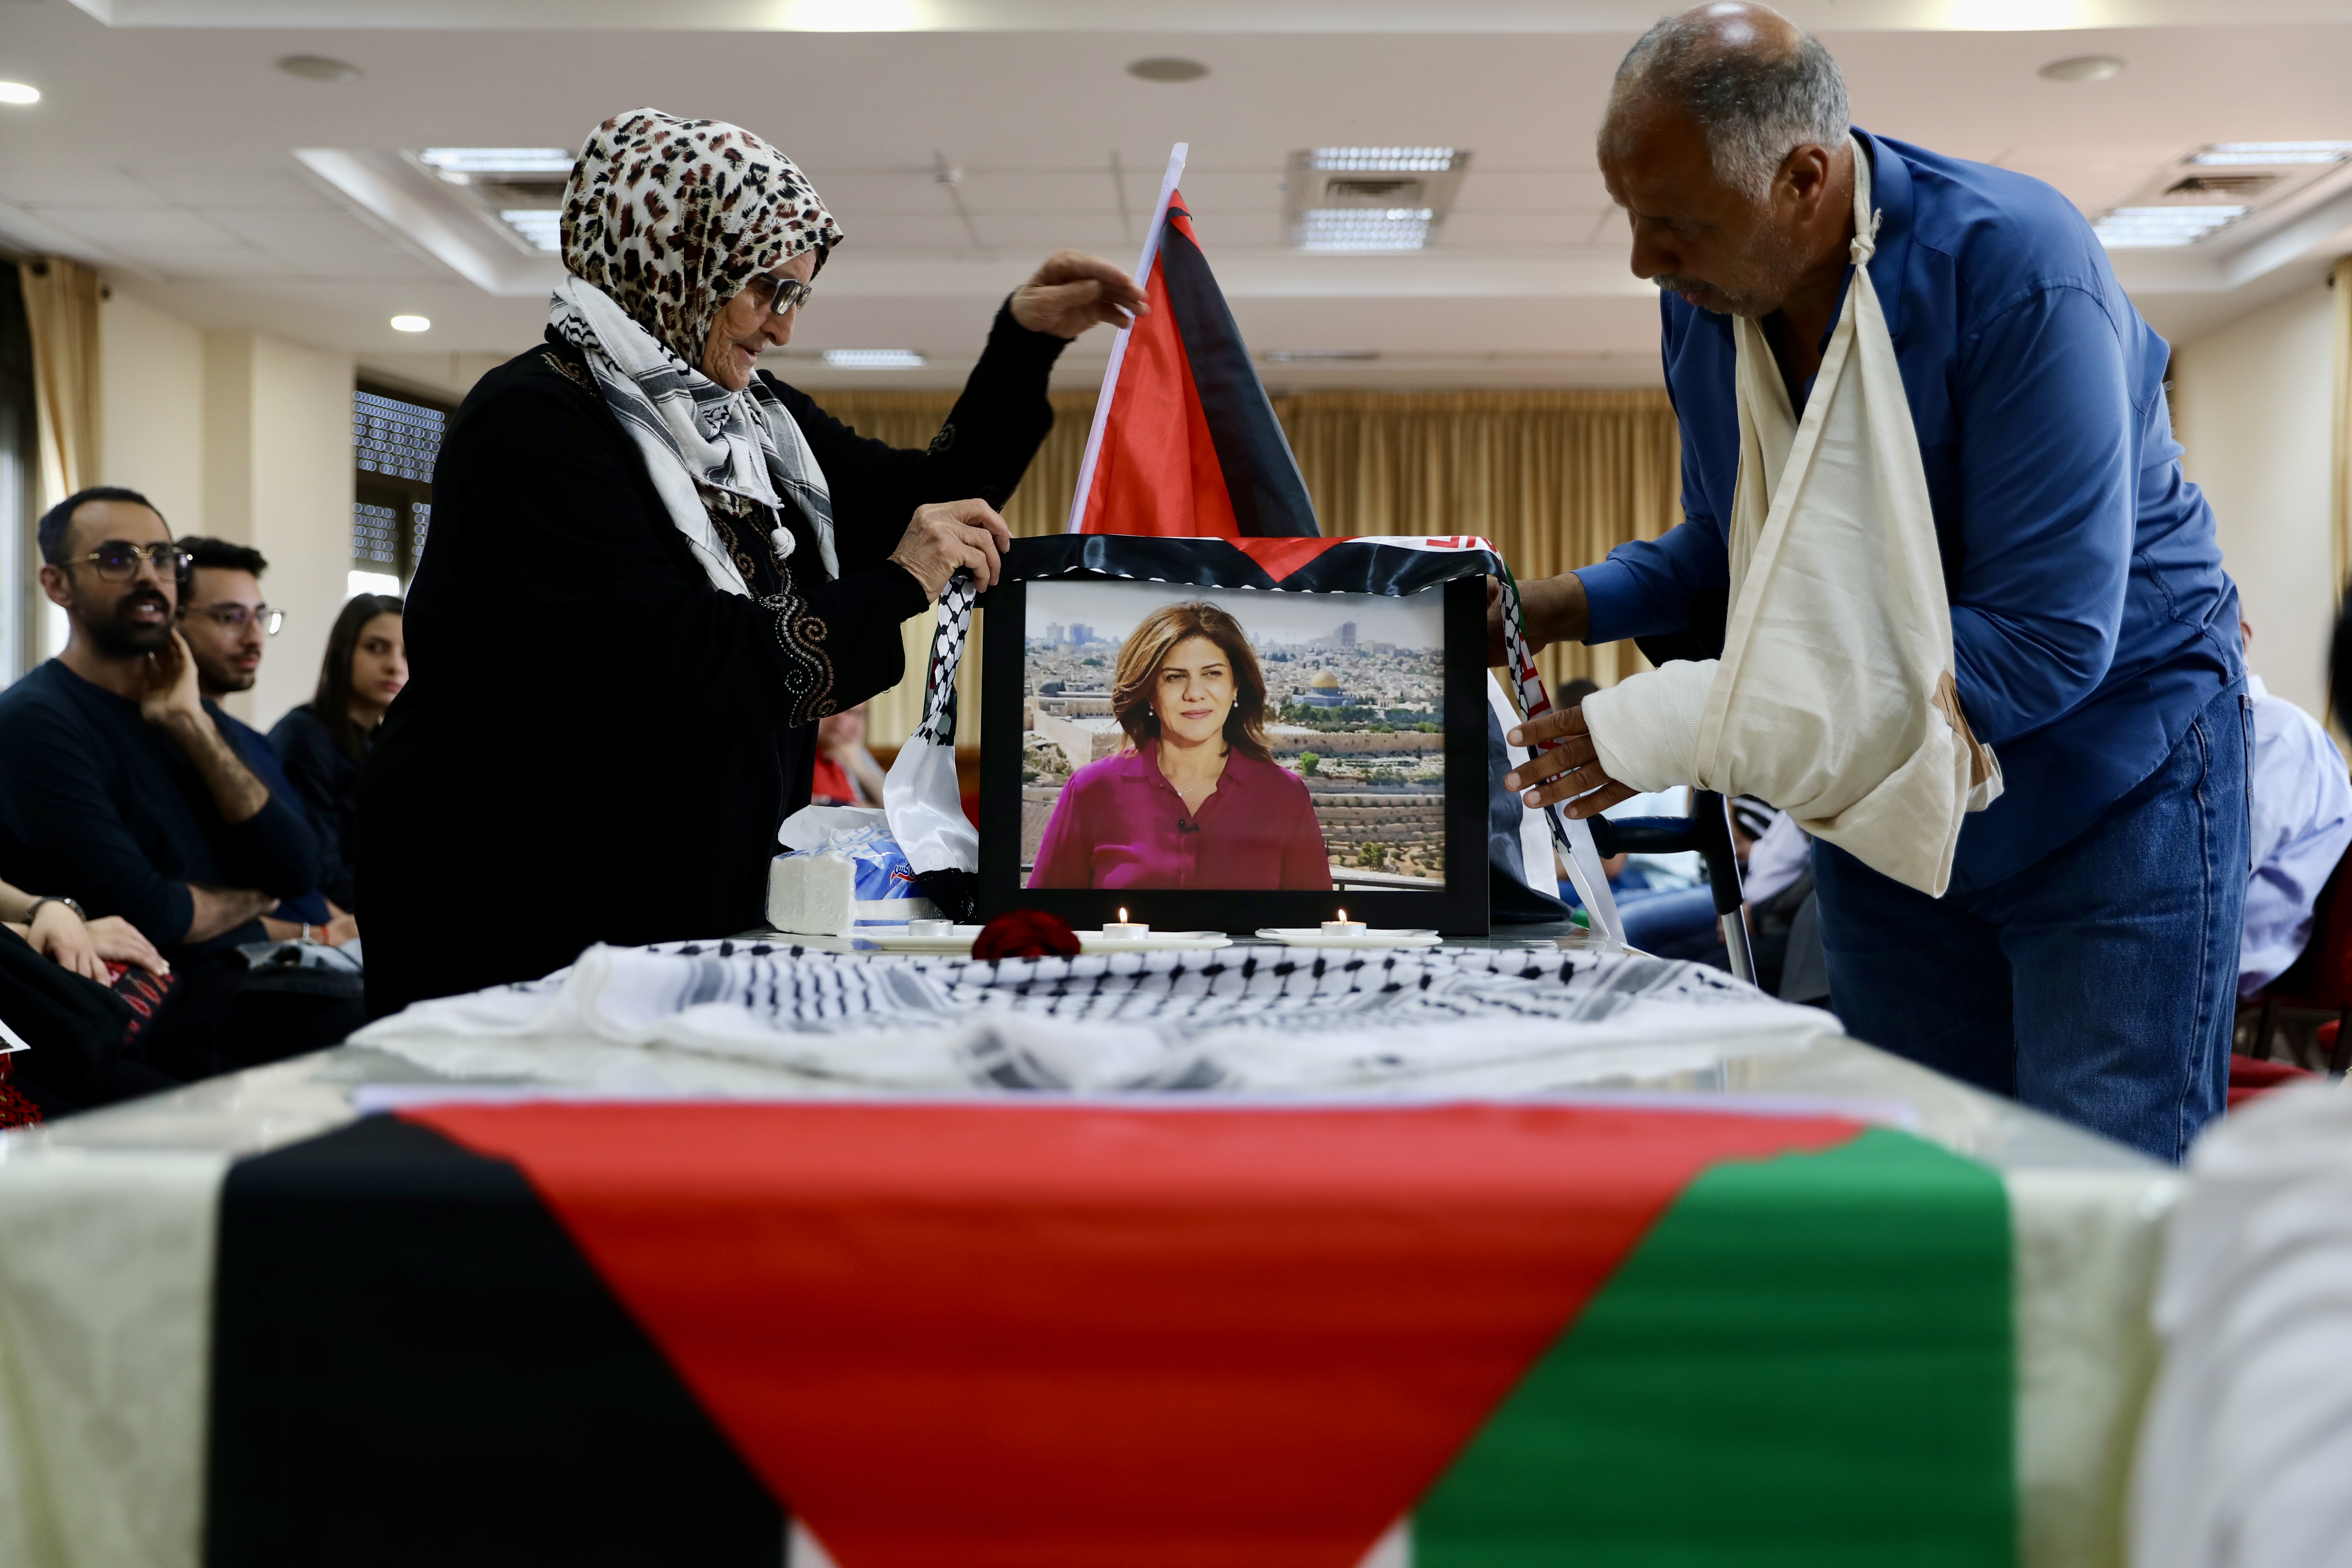 Condolence event in Jerusalem held for journalist Shireen Abu Akleh